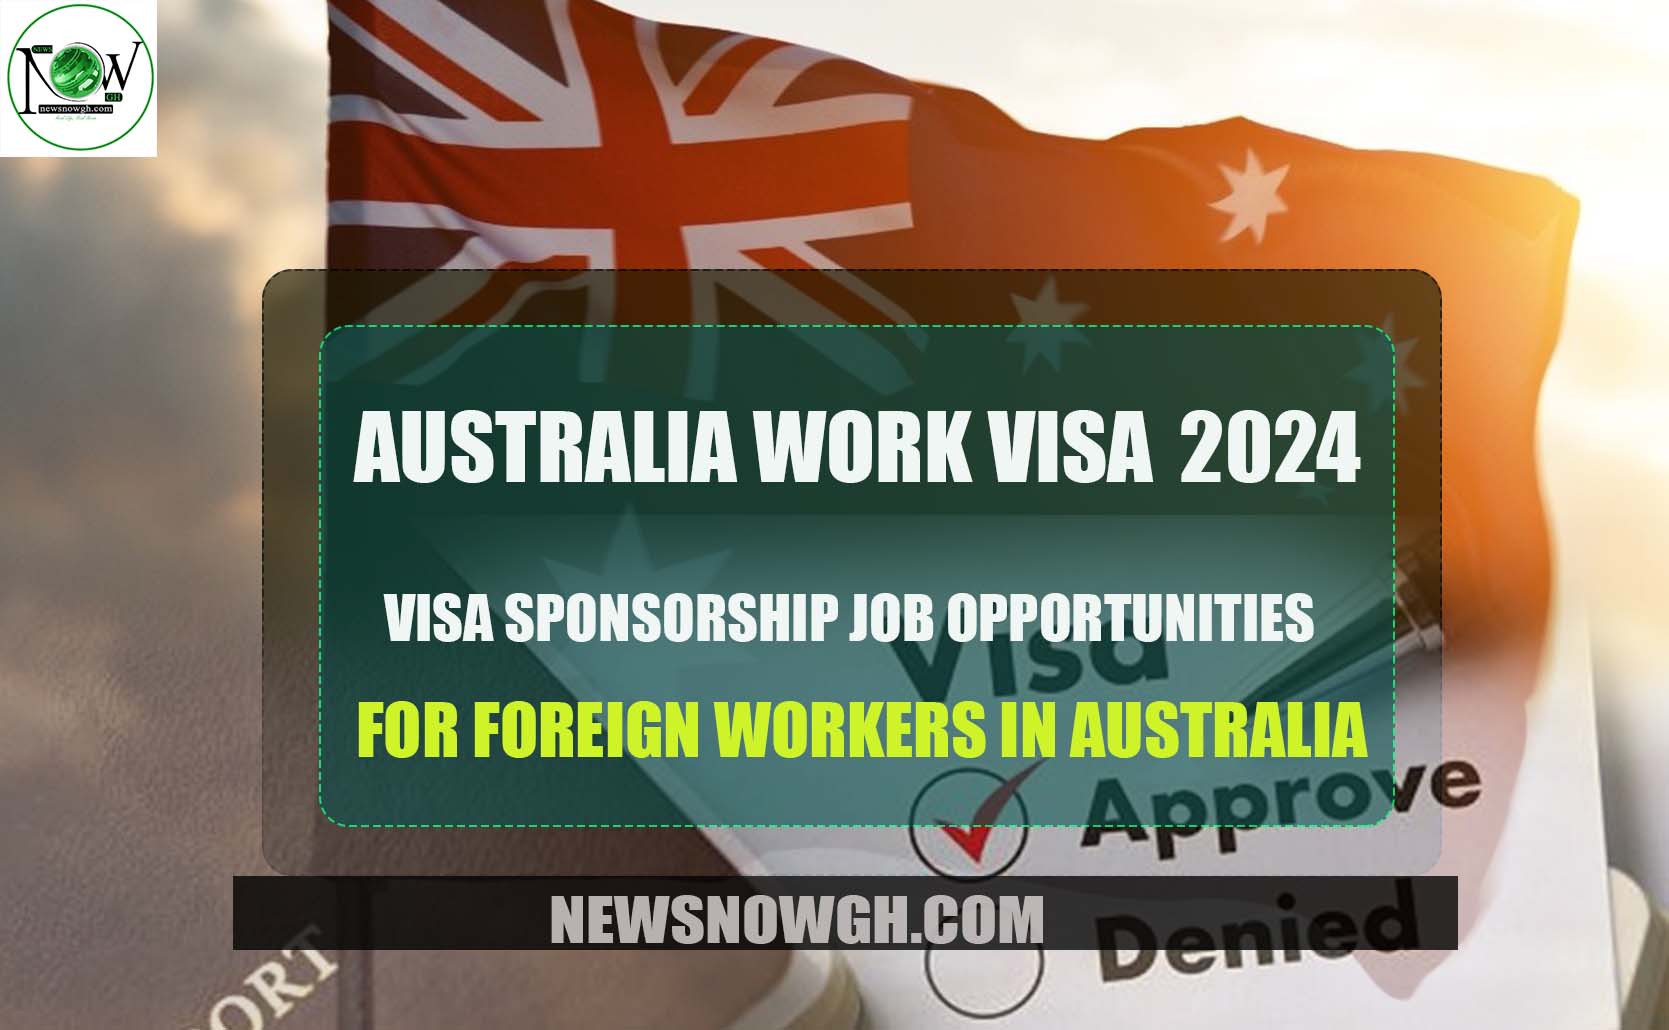 Visa Sponsorship Job Opportunities for Foreign Workers in Australia